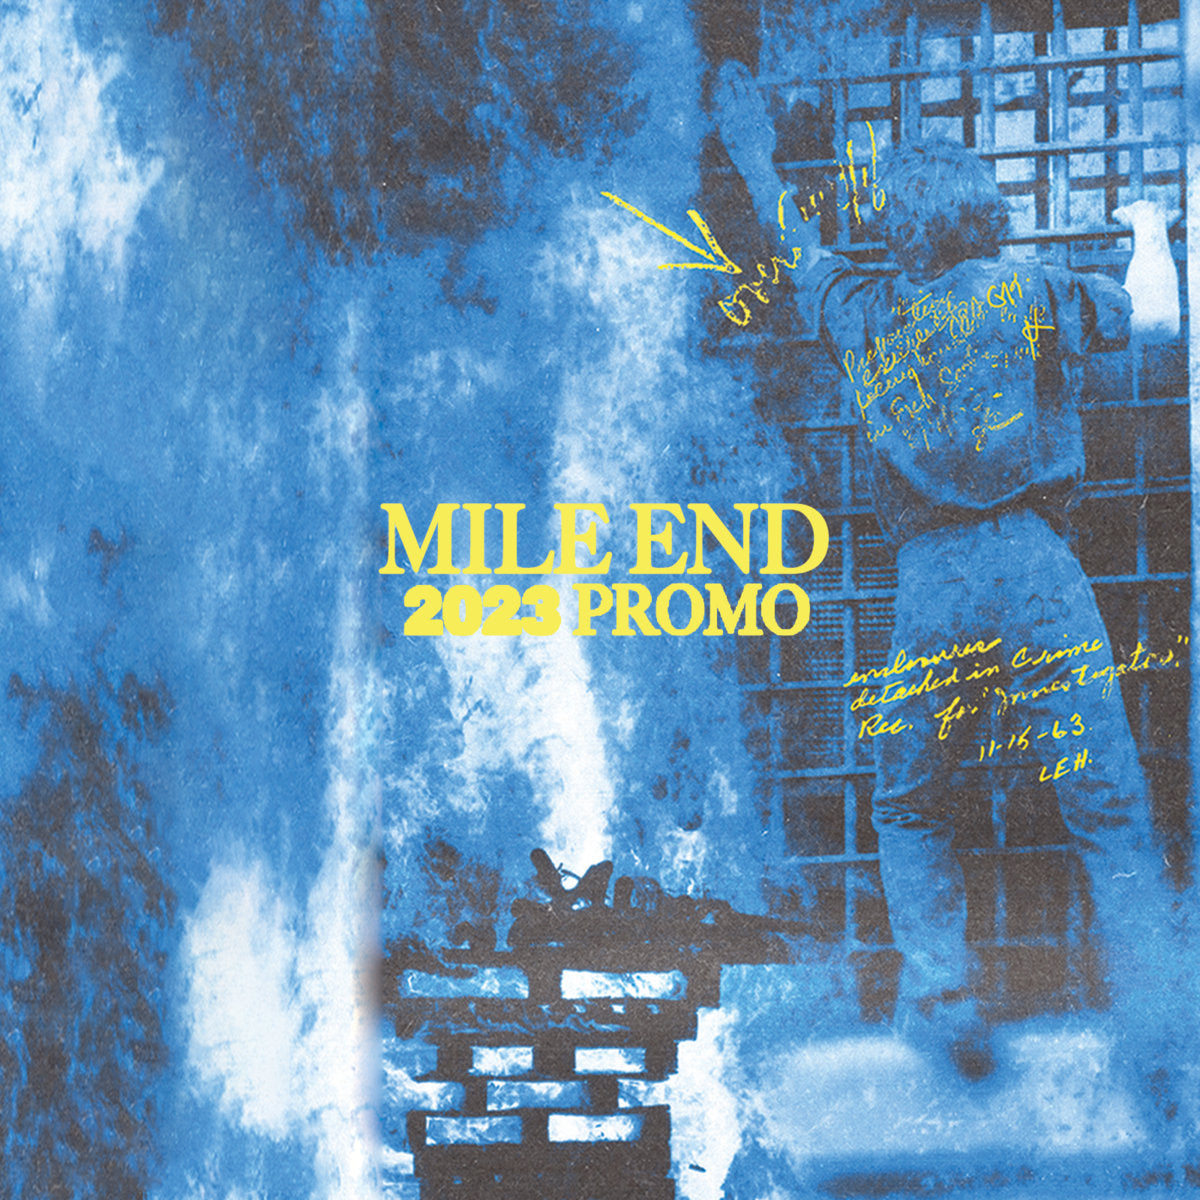 Mile End  "Promo 2023" CS